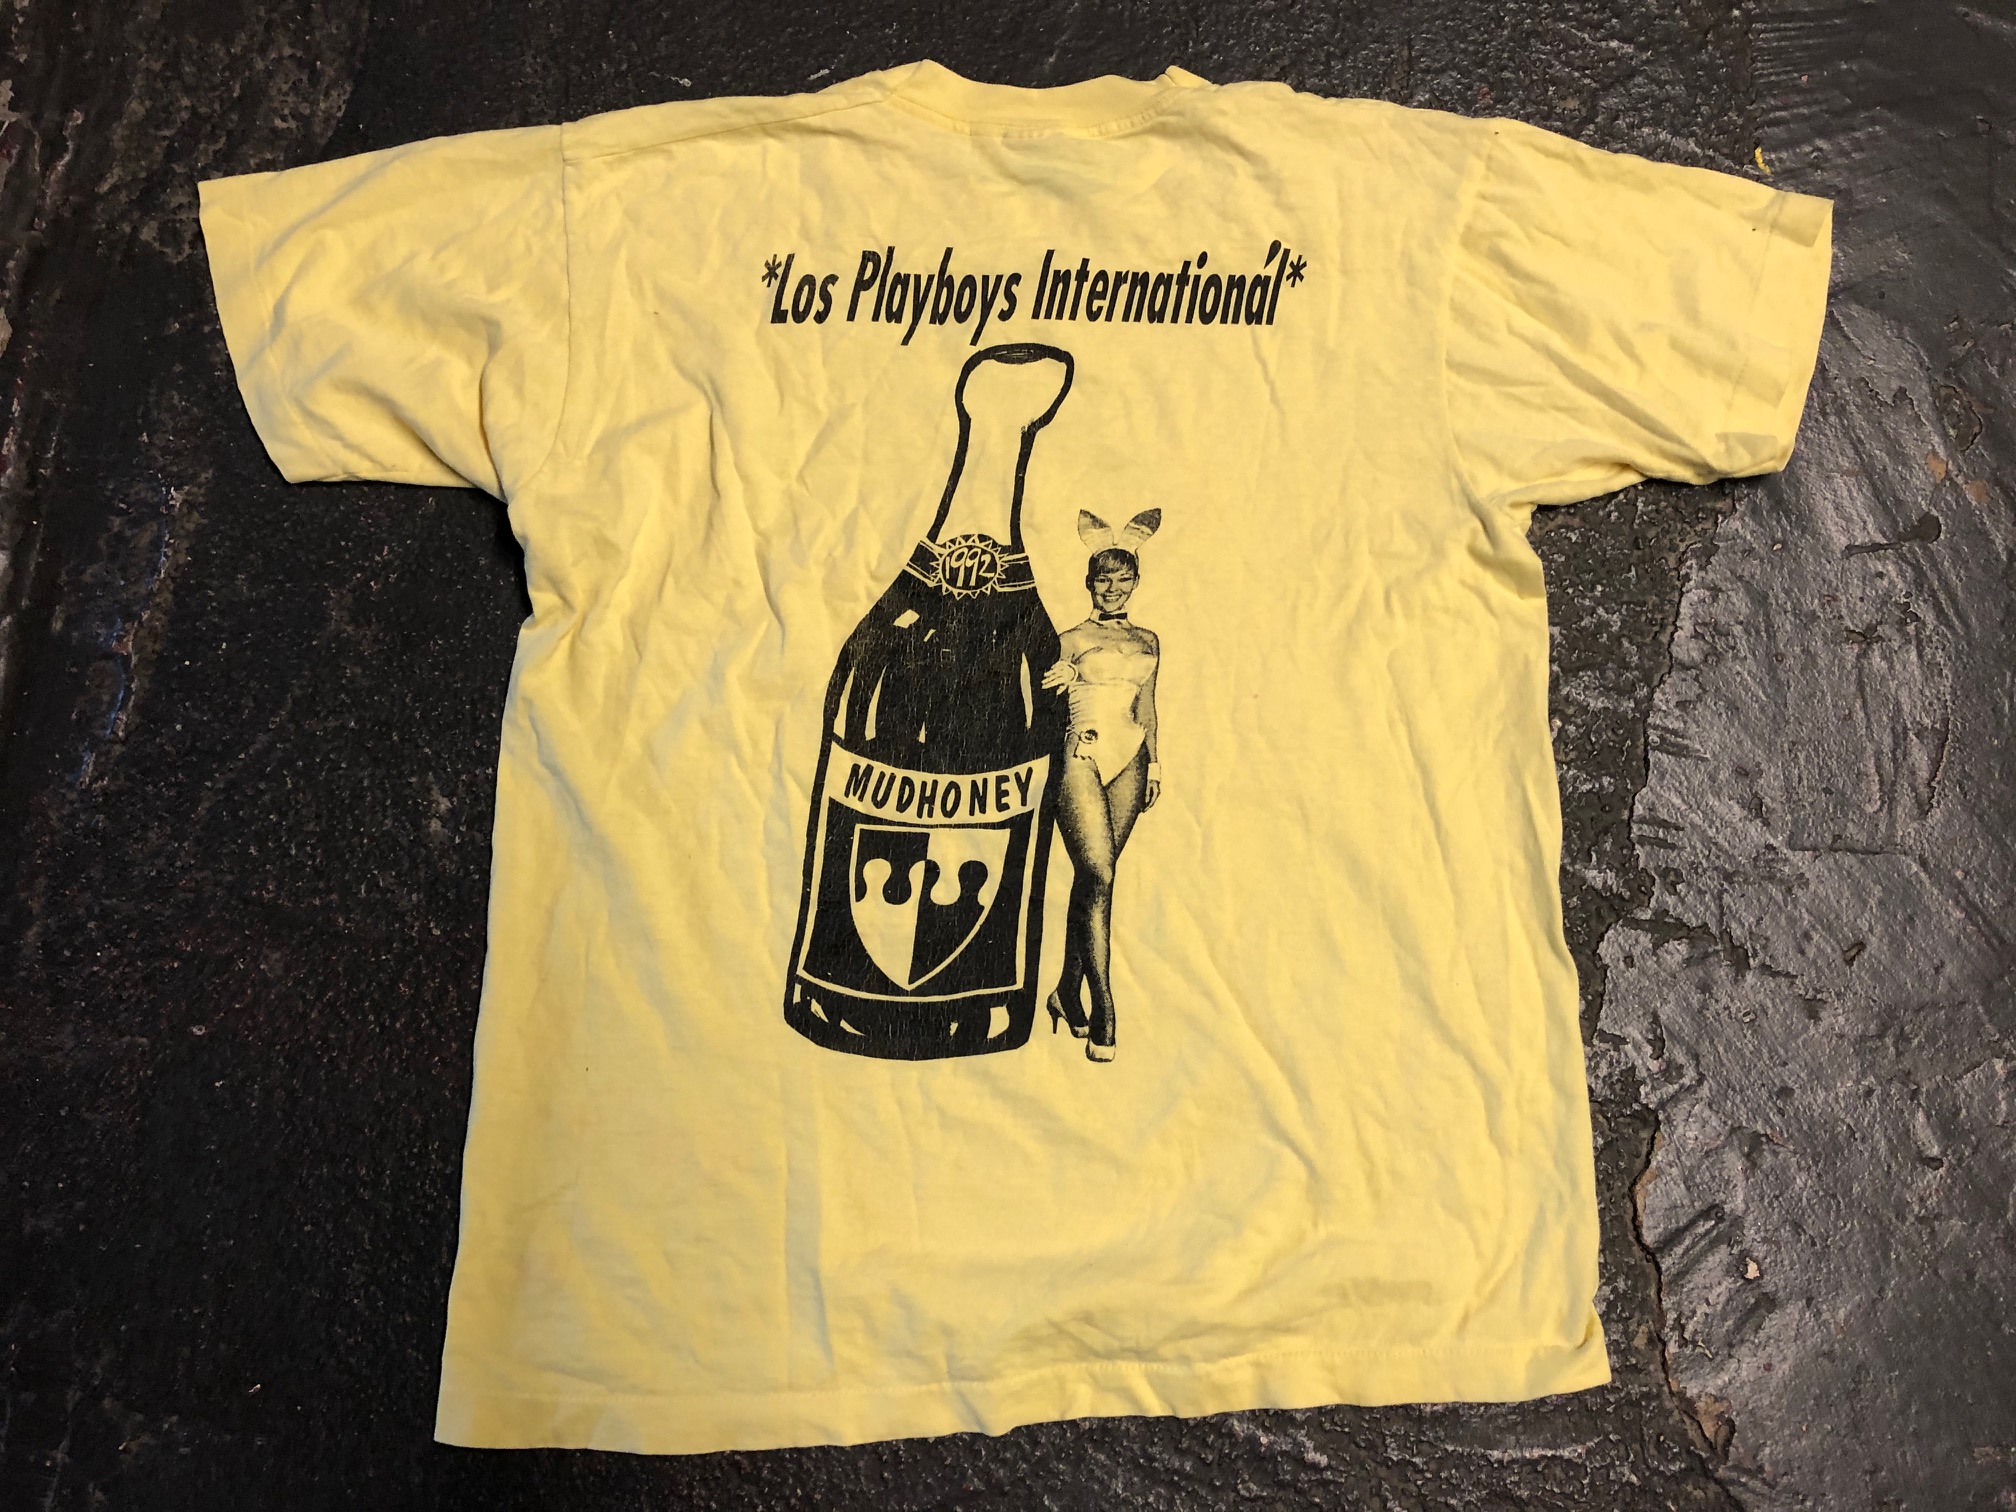 Mudhoney Tour Los Playboys International Tour Shirt Large Yellow 1992 10.jpg